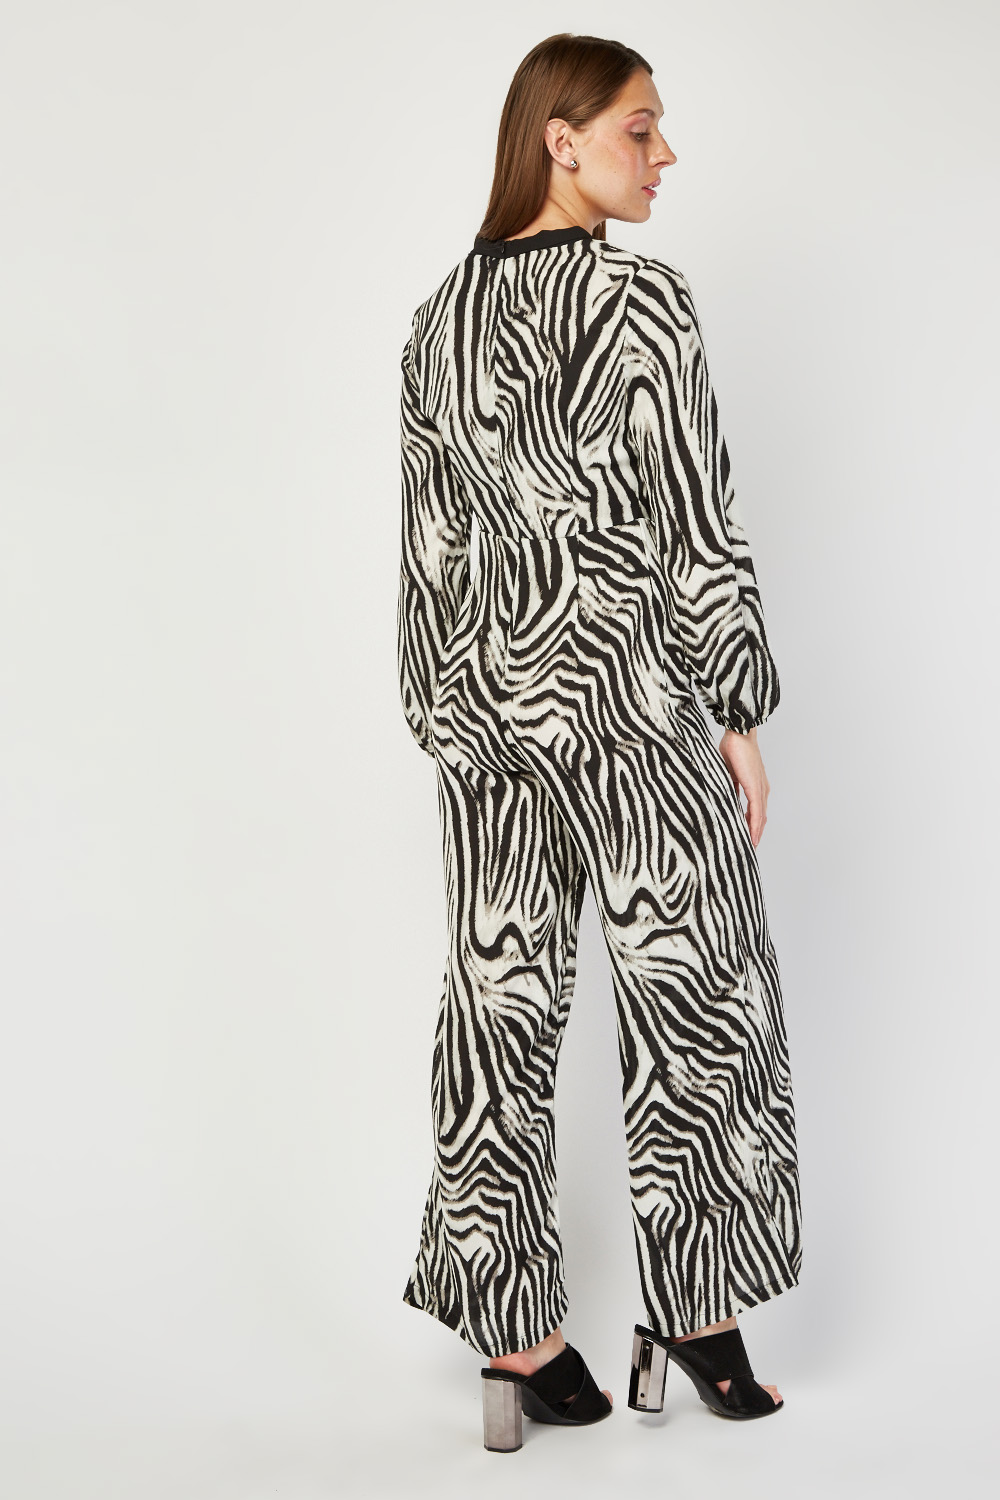 Sheer Zebra Print Jumpsuit - Just $3